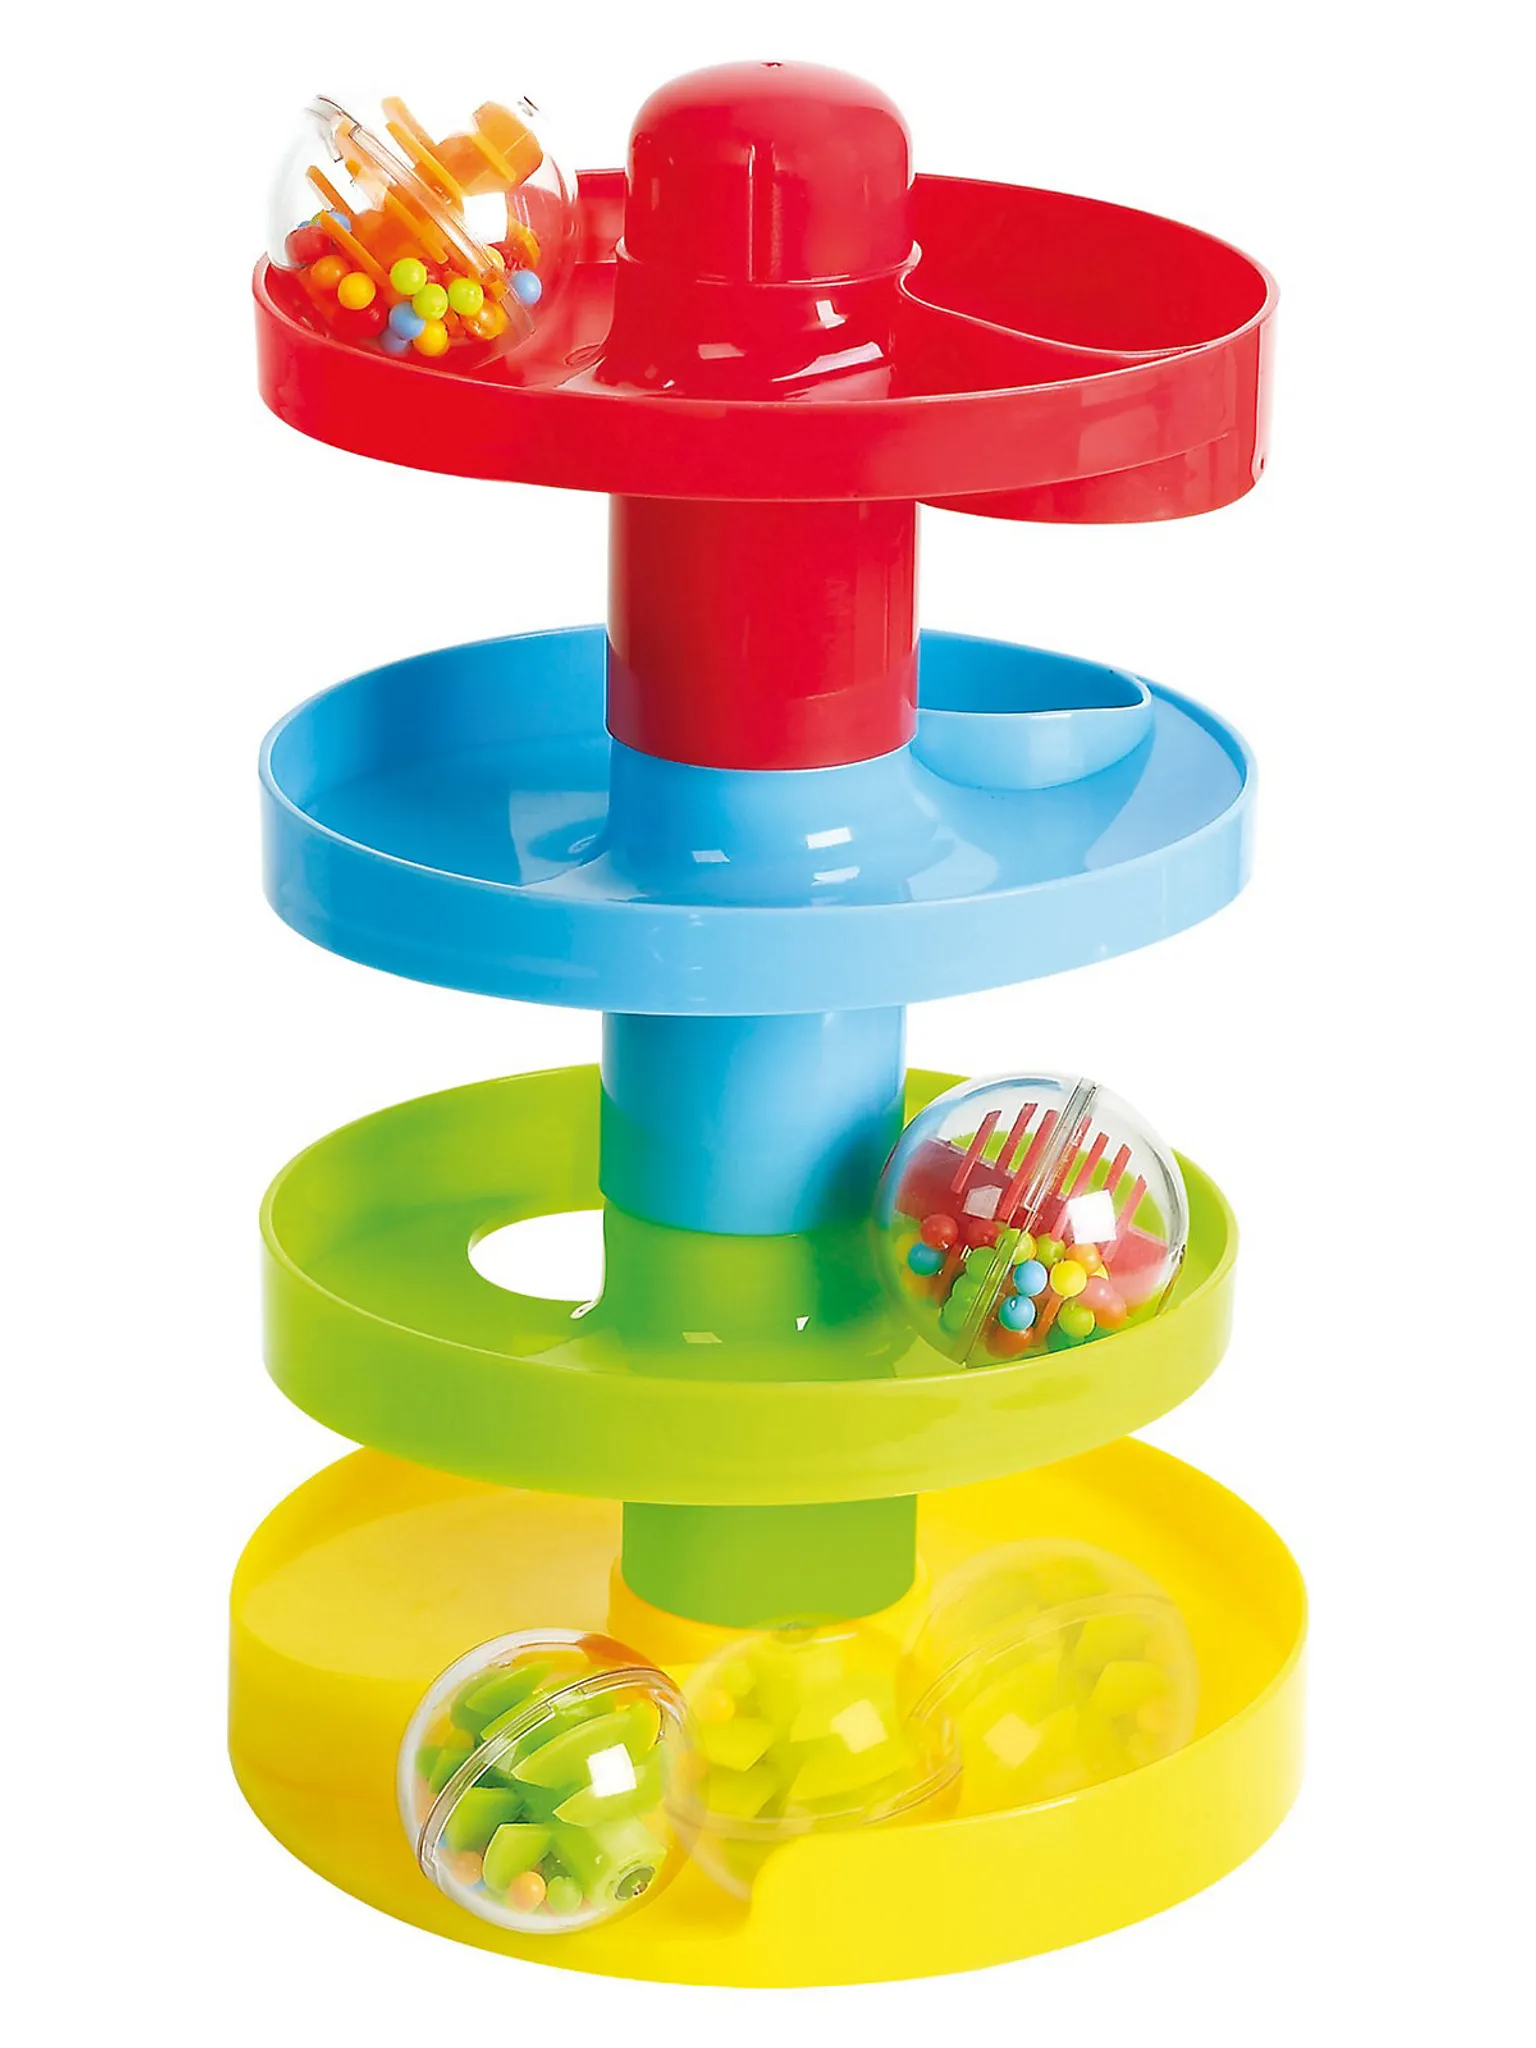 Горка с шарами. PLAYGO Лабиринт с шариками. Игрушка горка с шариками. Игрушка спираль с шариками. Башня с шариками игрушка для детей.